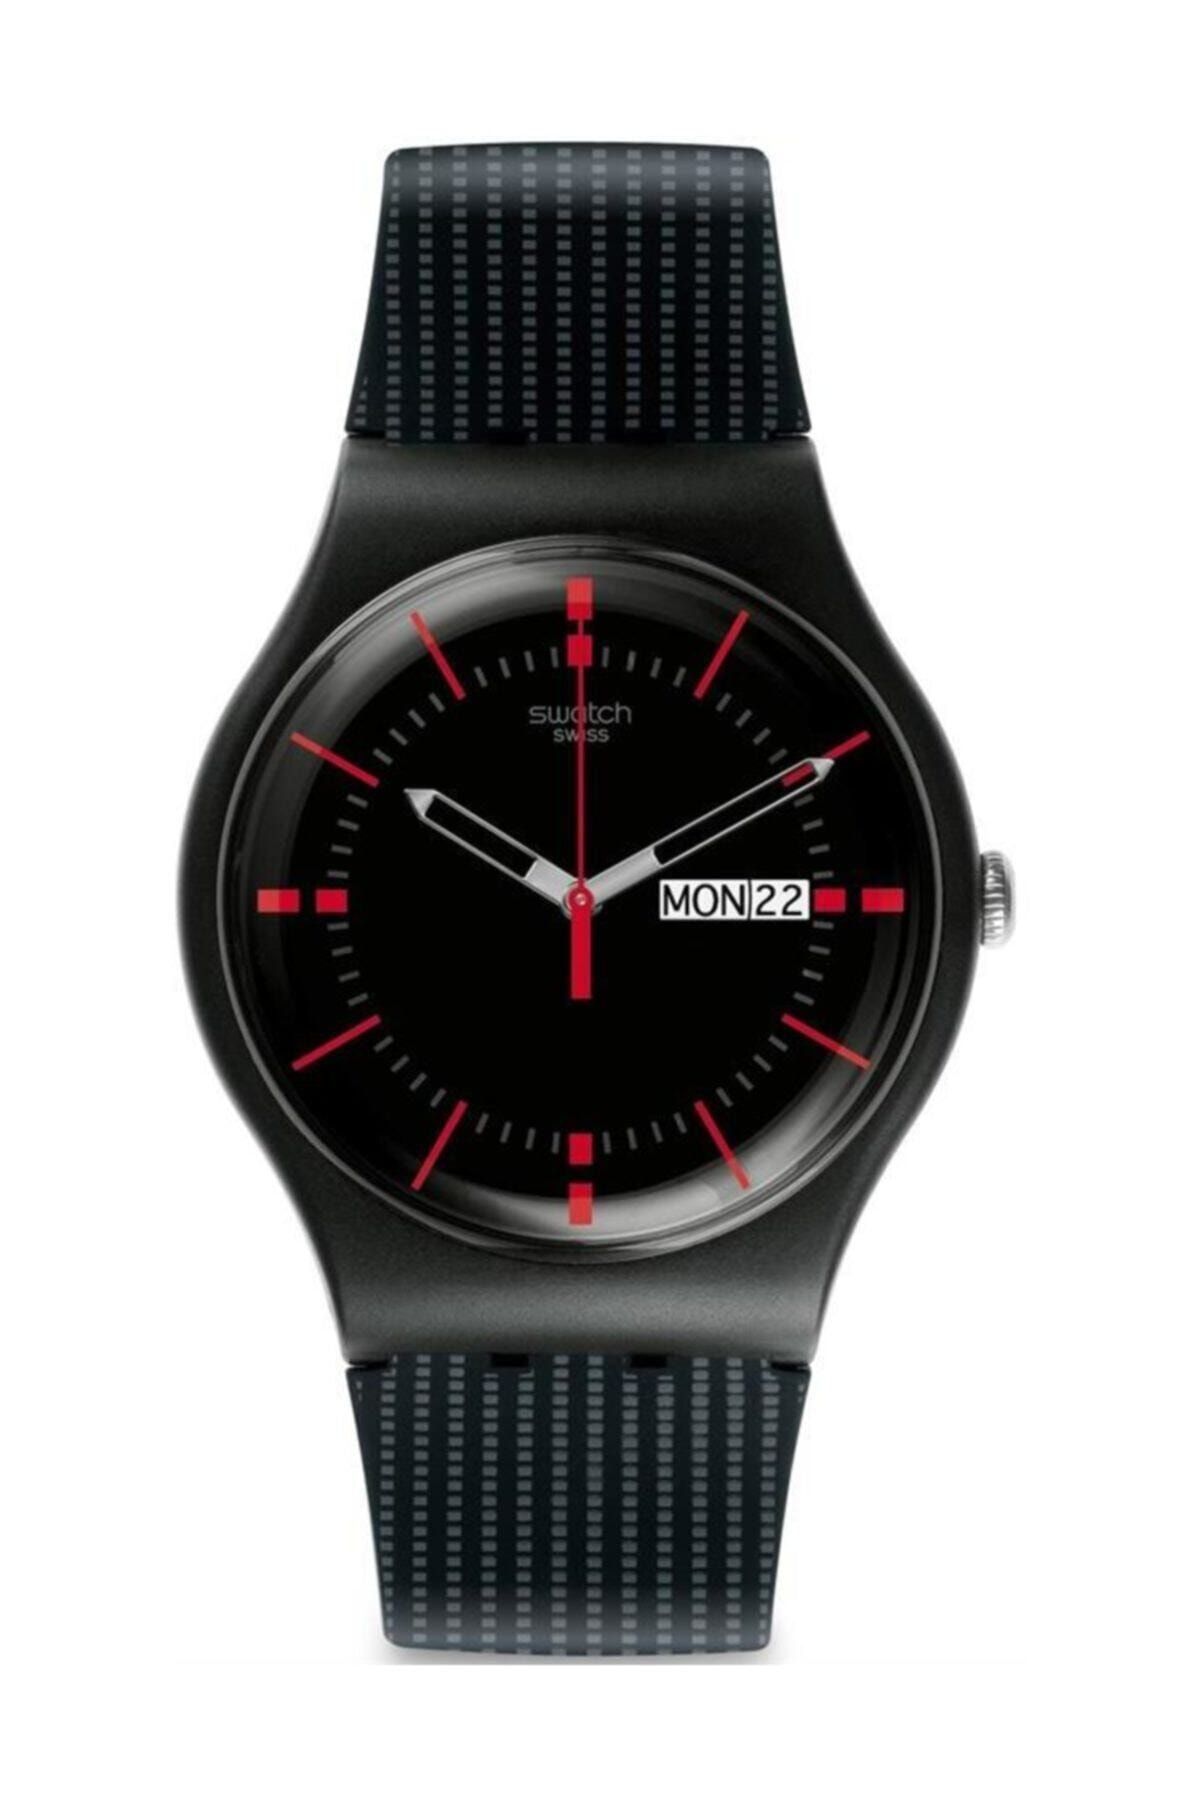 Часы свотч каталог. Swatch suob717. Часы Swatch Swiss мужские. Swatch Swiss часы мужские черные. Часы Swatch Swiss suob702b.